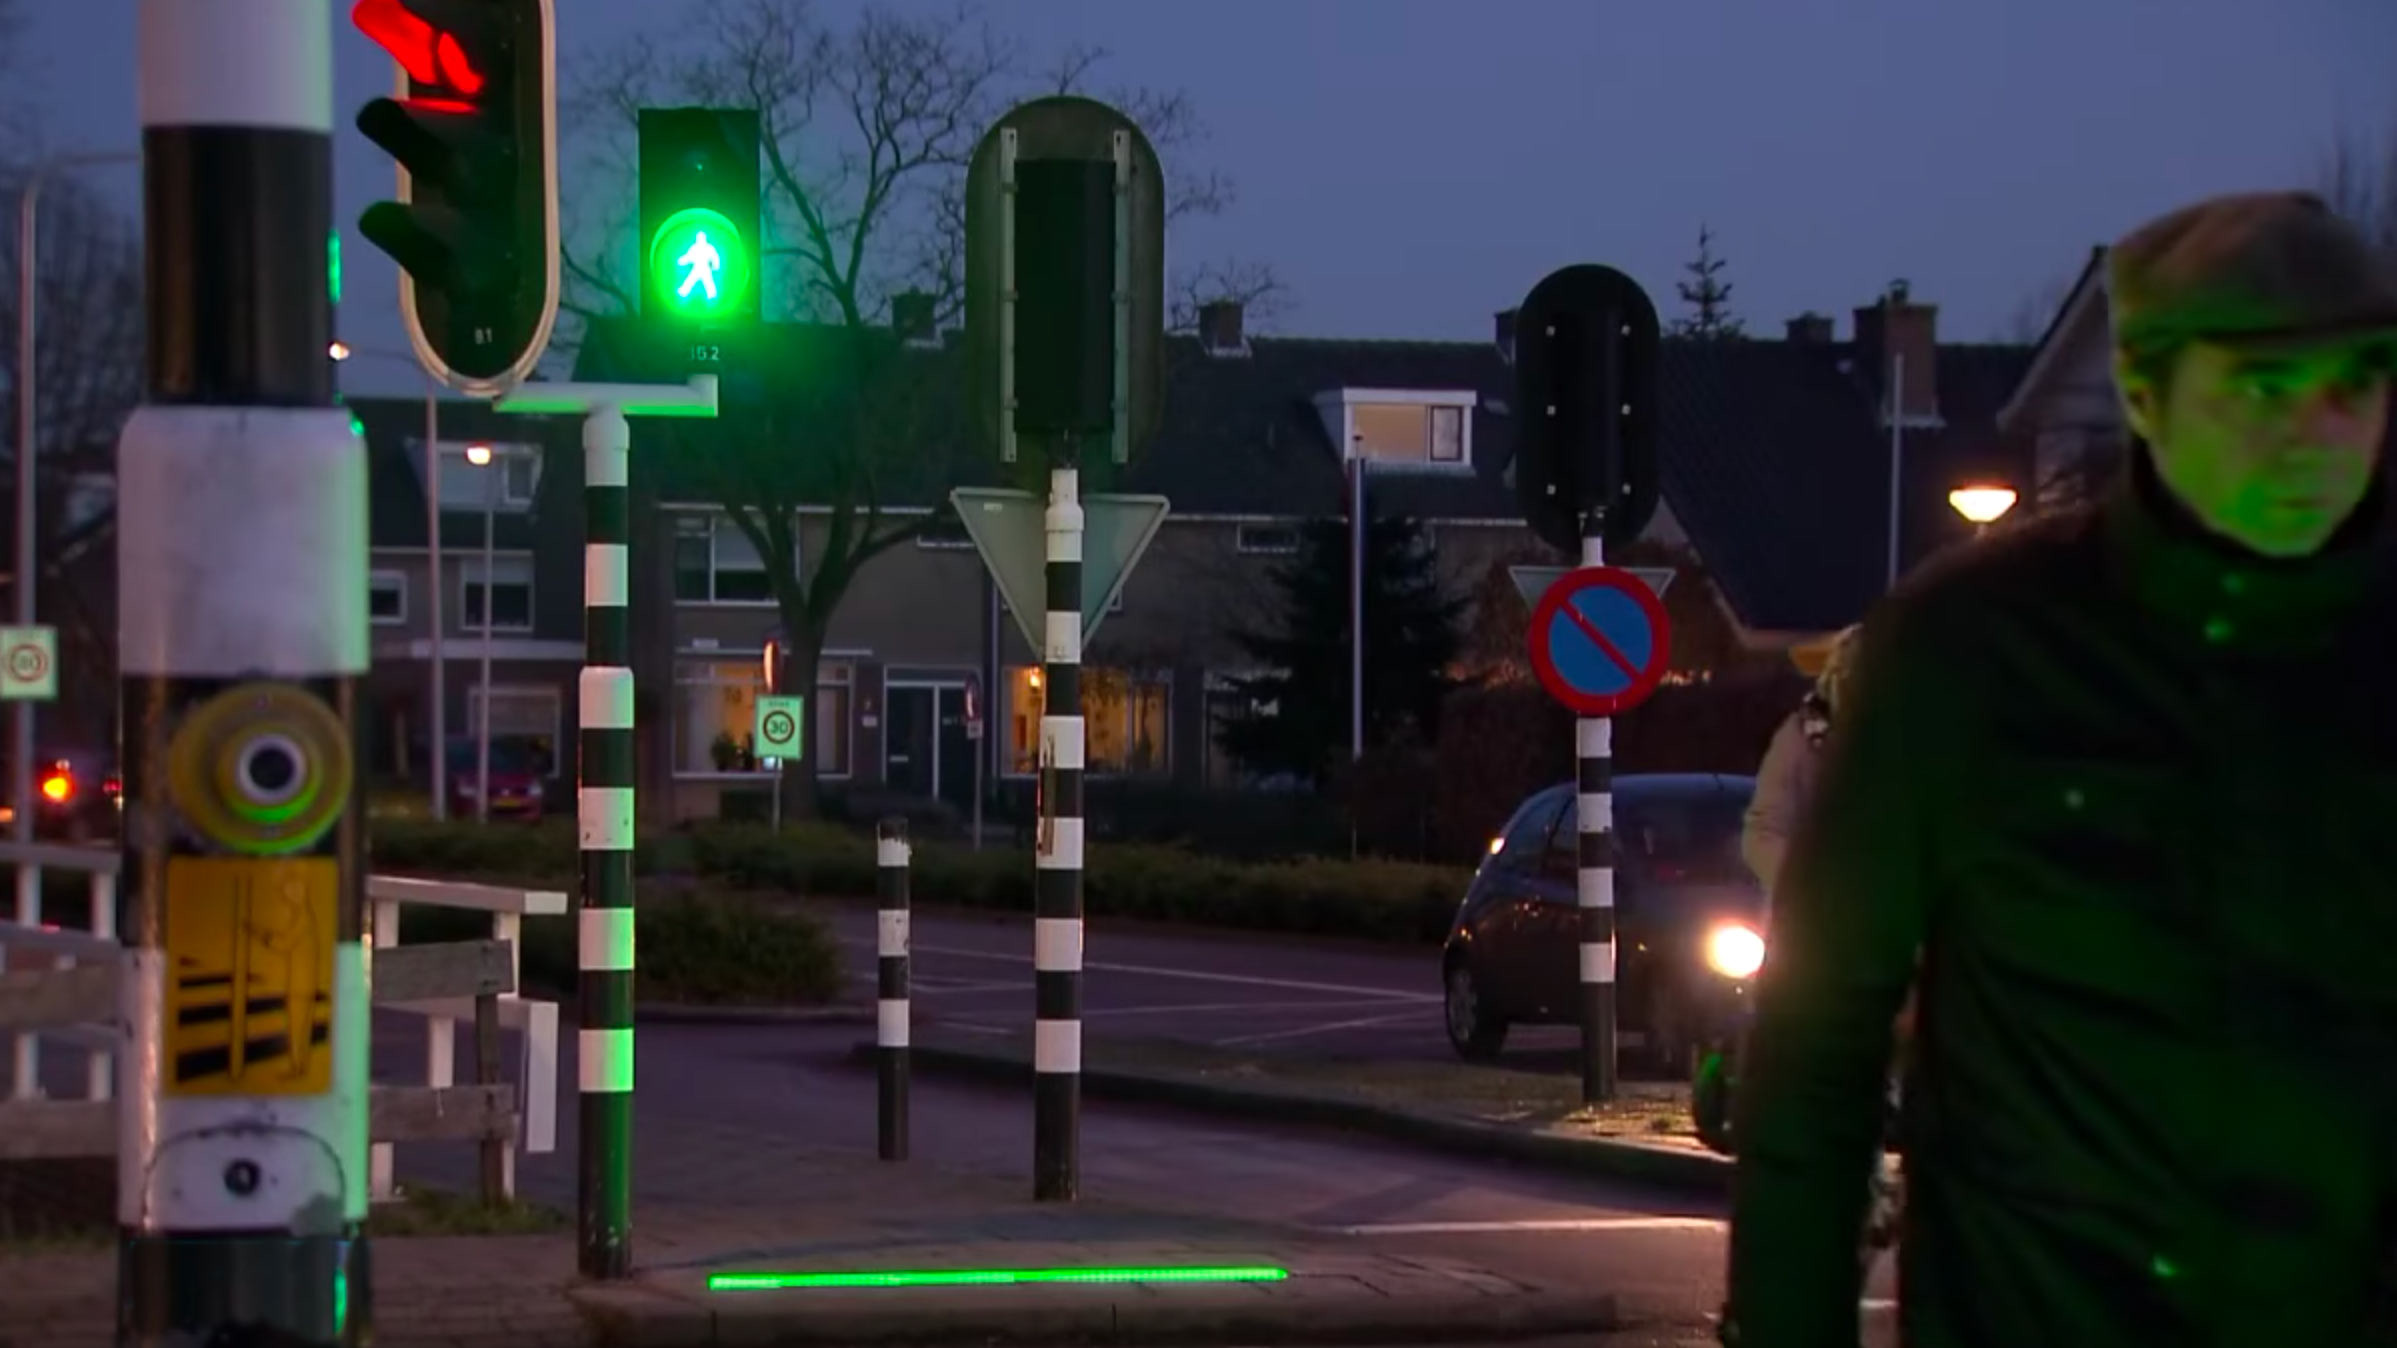 Кадр видео Speciale verkeerslichten smartphone zombies — RTL NIEUWS. Скриншот © L!FE